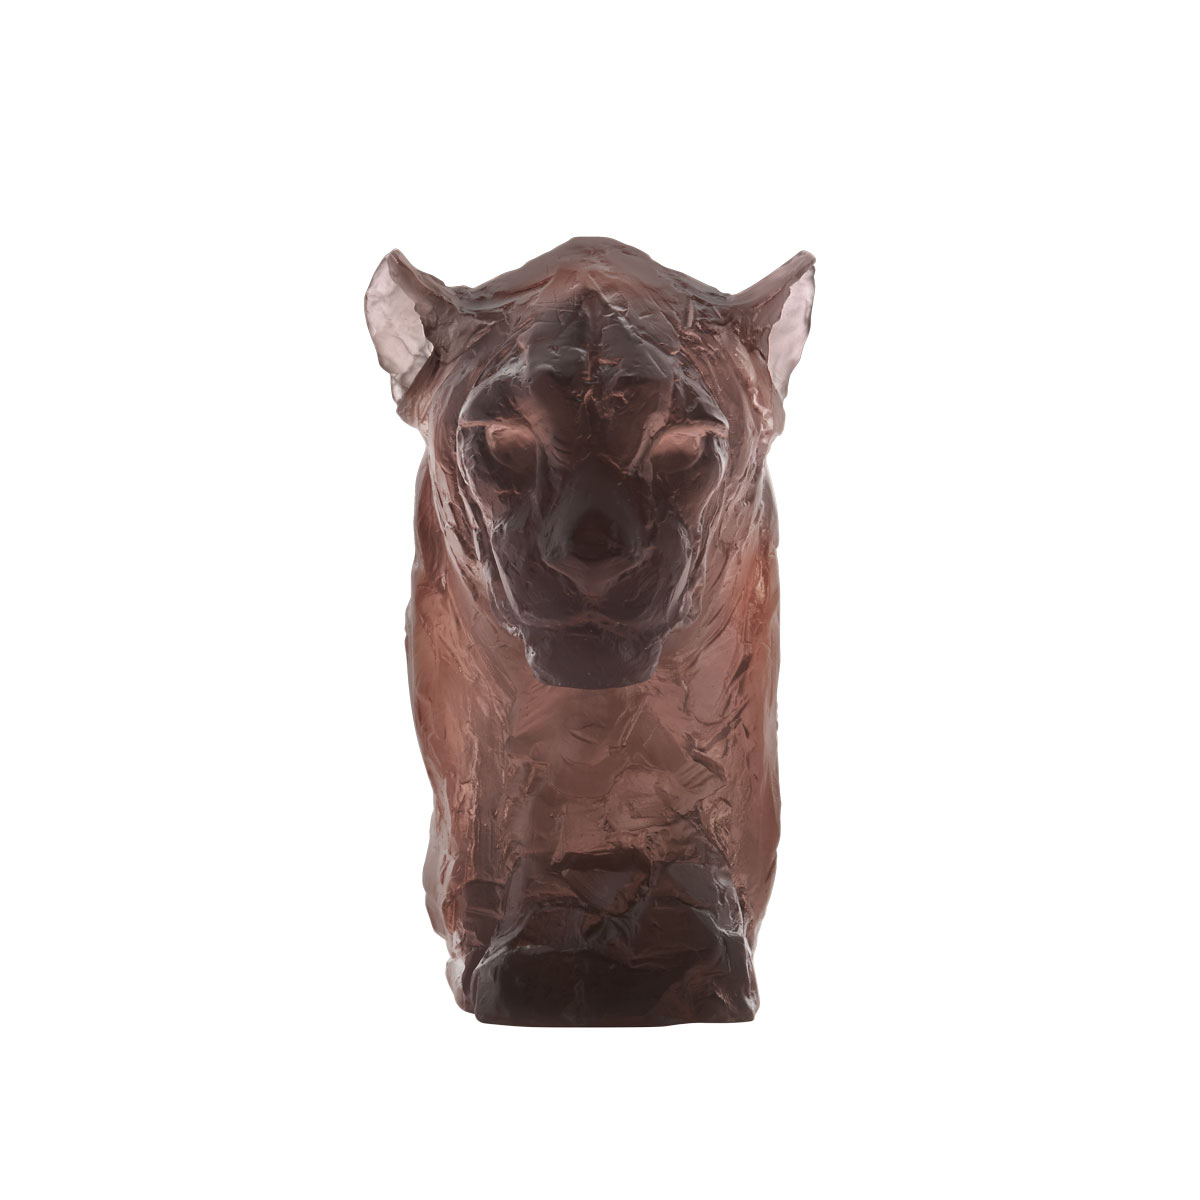 Daum Panther Head by Patrick Villas, Limited Edition Sculpture